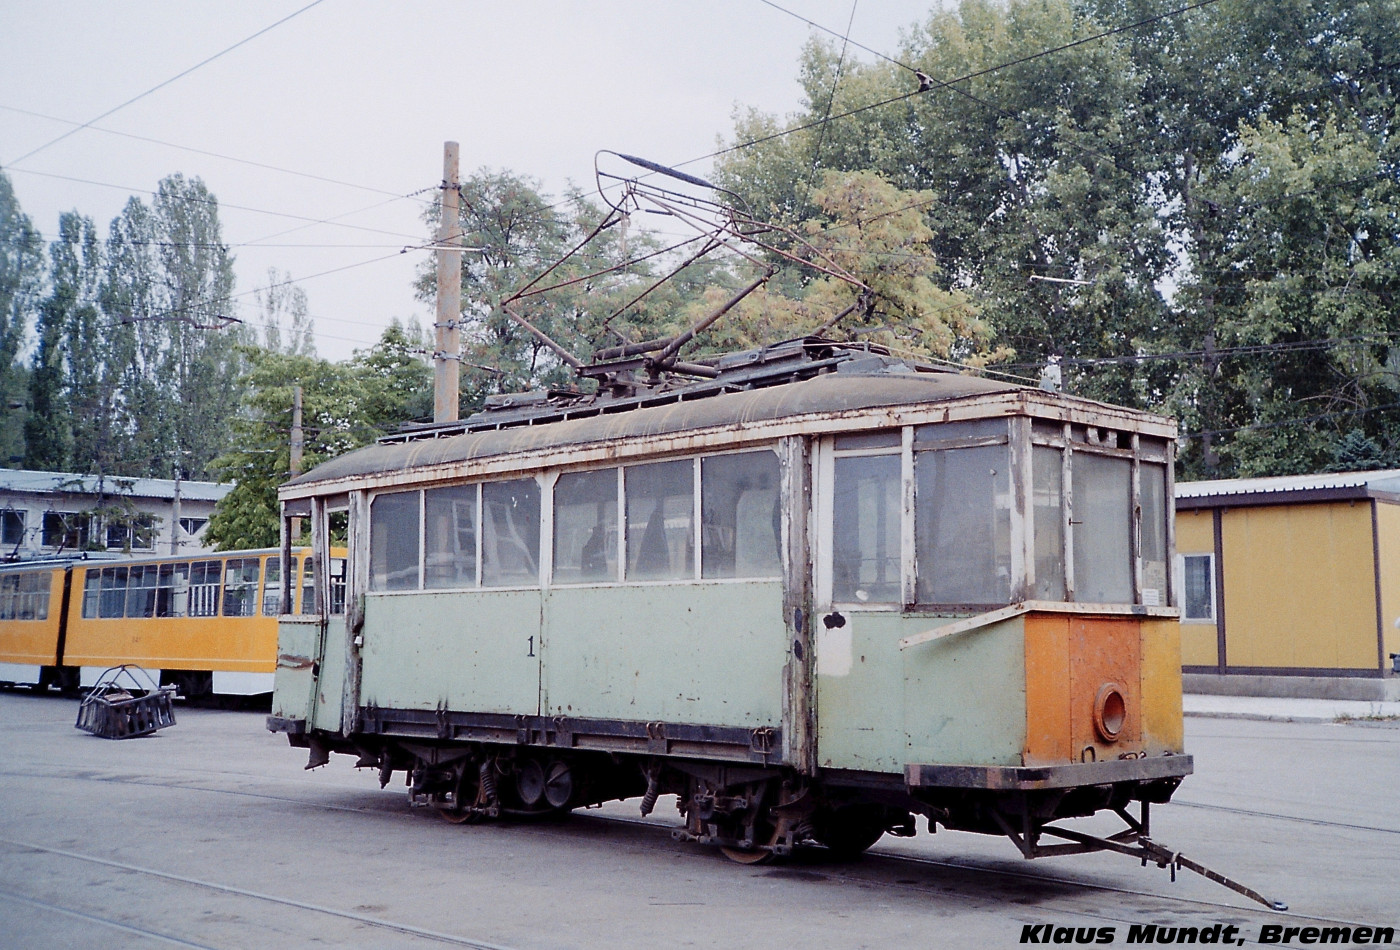 Miscellaneous 2-axle tram #35